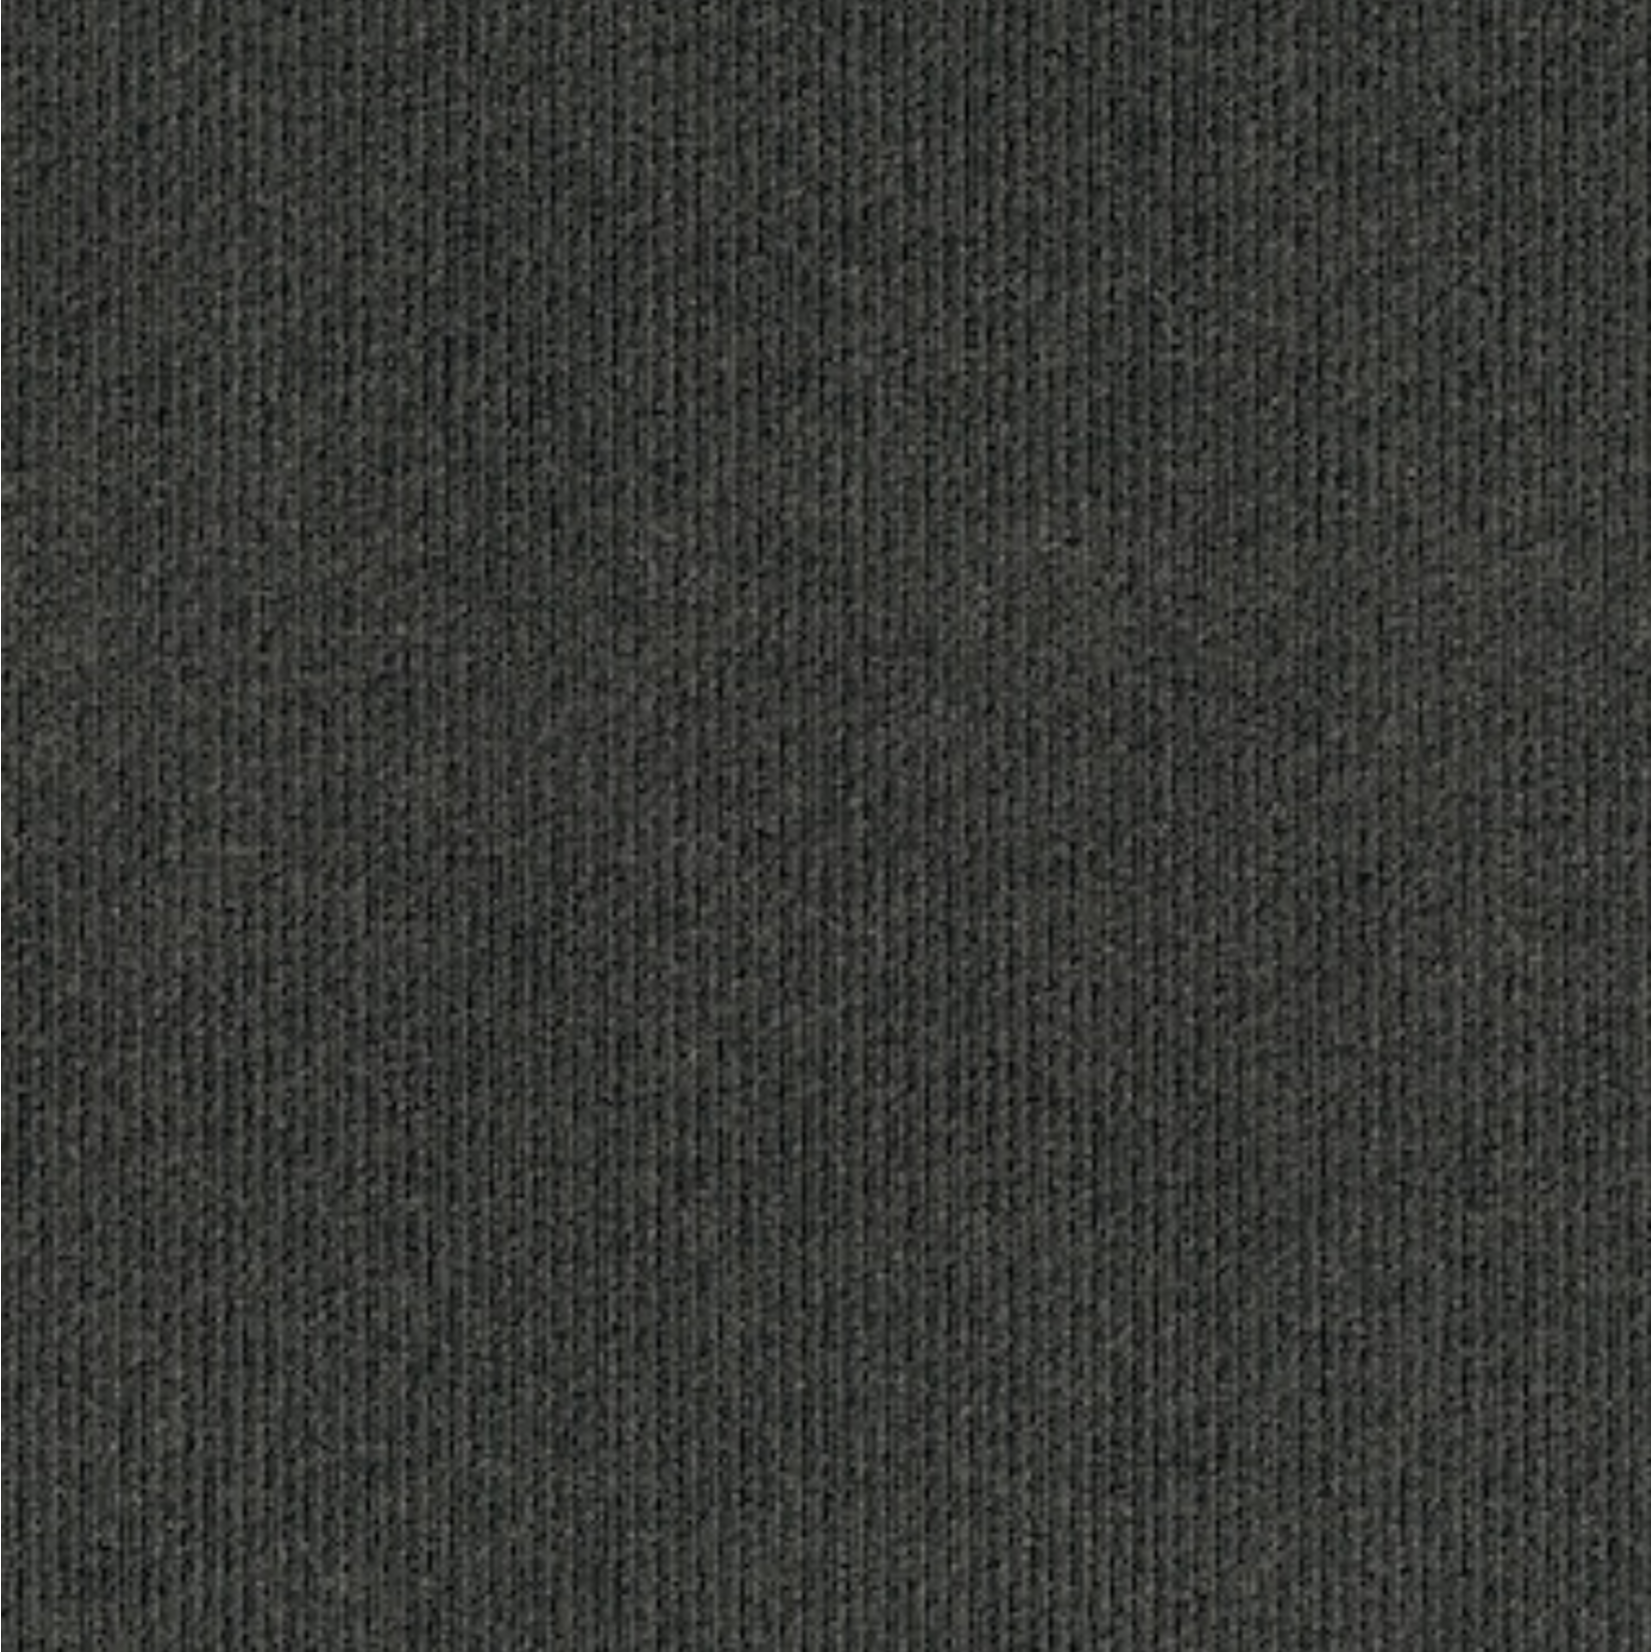 12037 Foss Vanguard Black Ice Pattern Carpet Tile